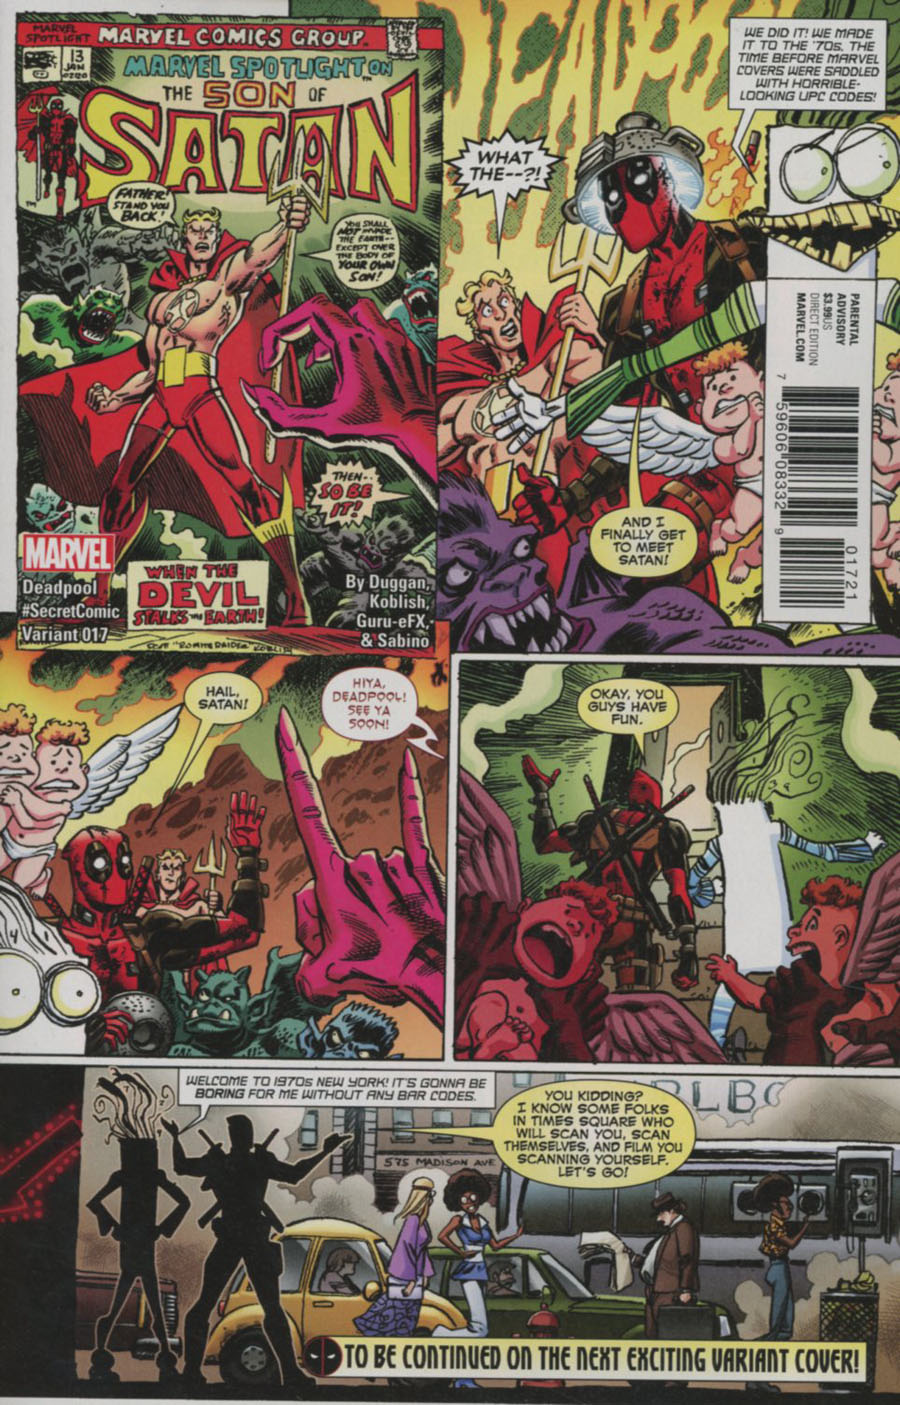 Deadpool Vol 5 #17 Cover B Variant Scott Koblish Secret Comic Cover (Civil War II Tie-In)